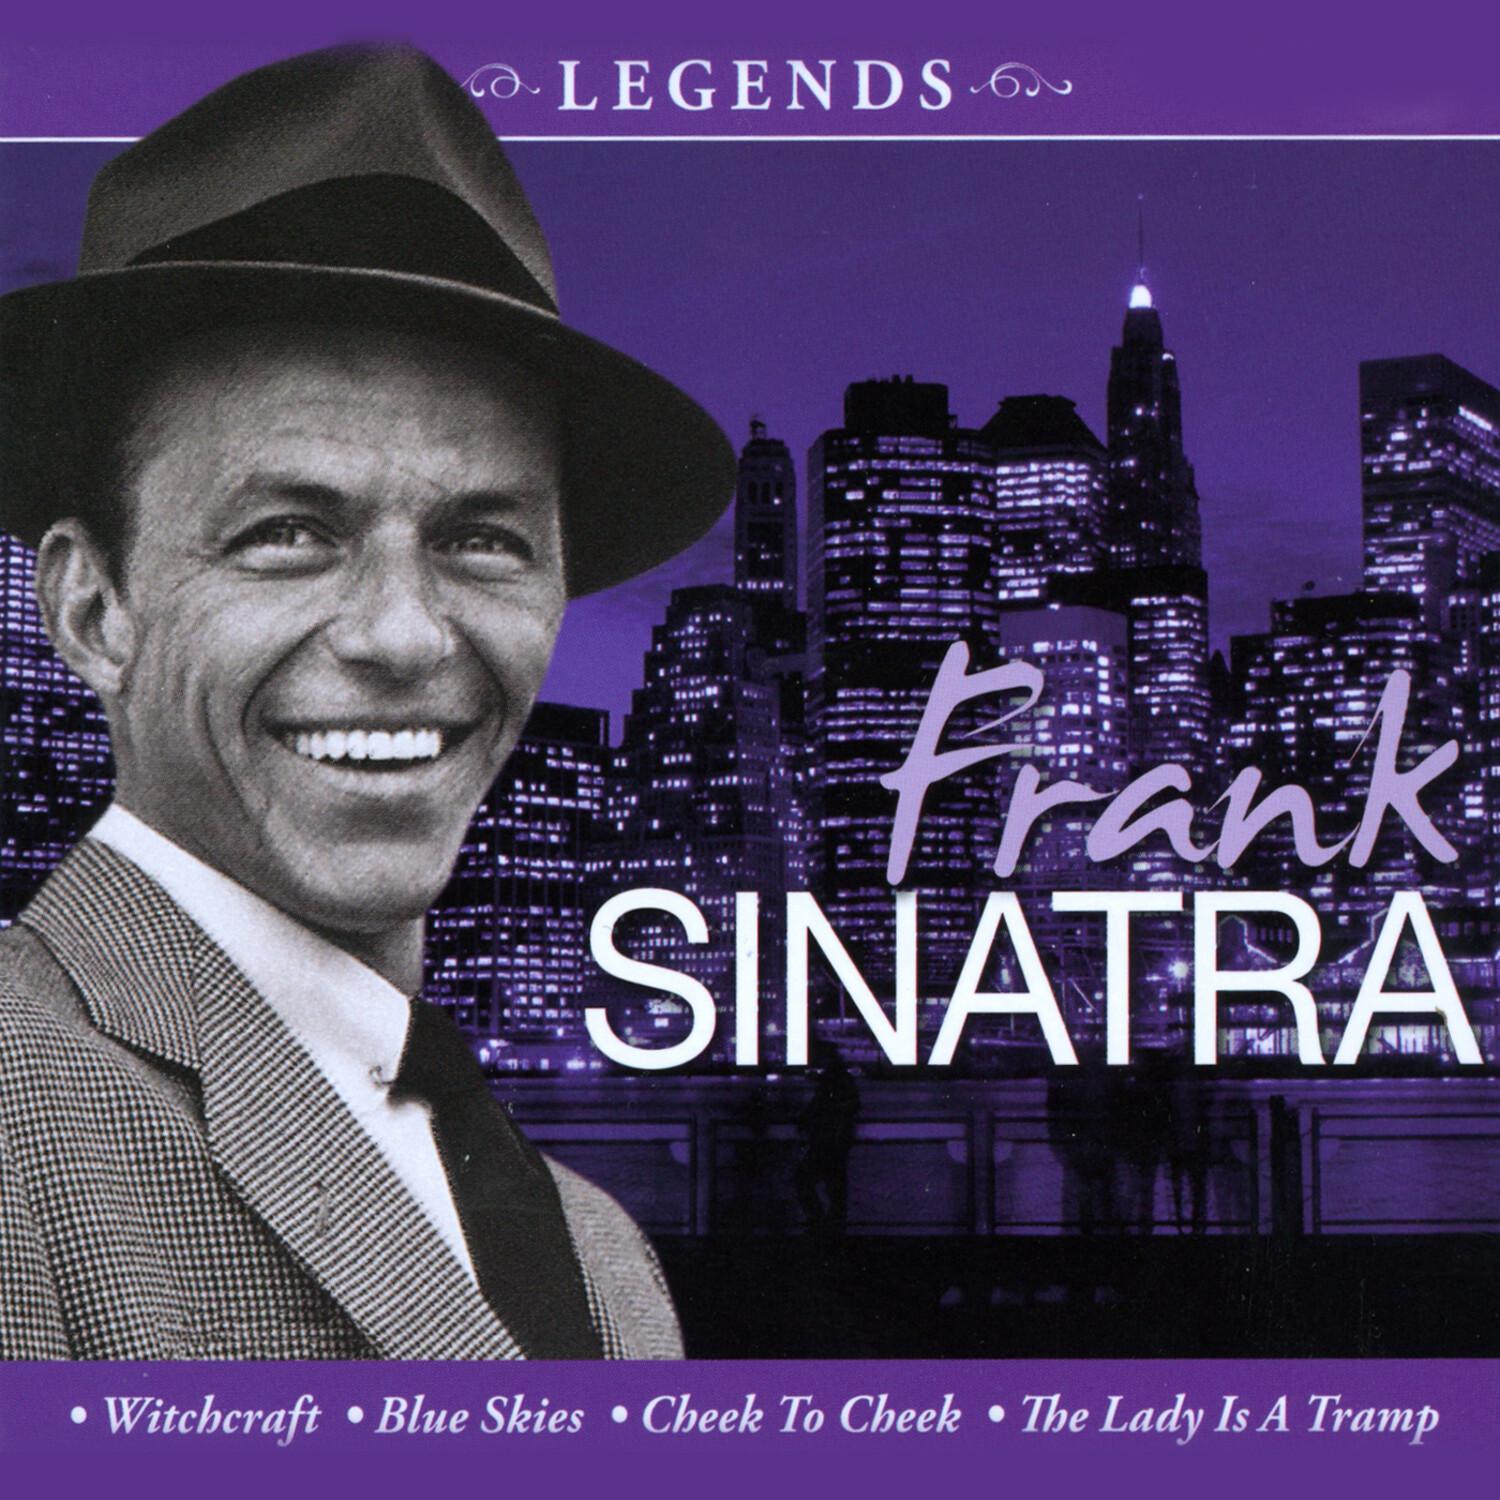 Legends - Frank Sinatra